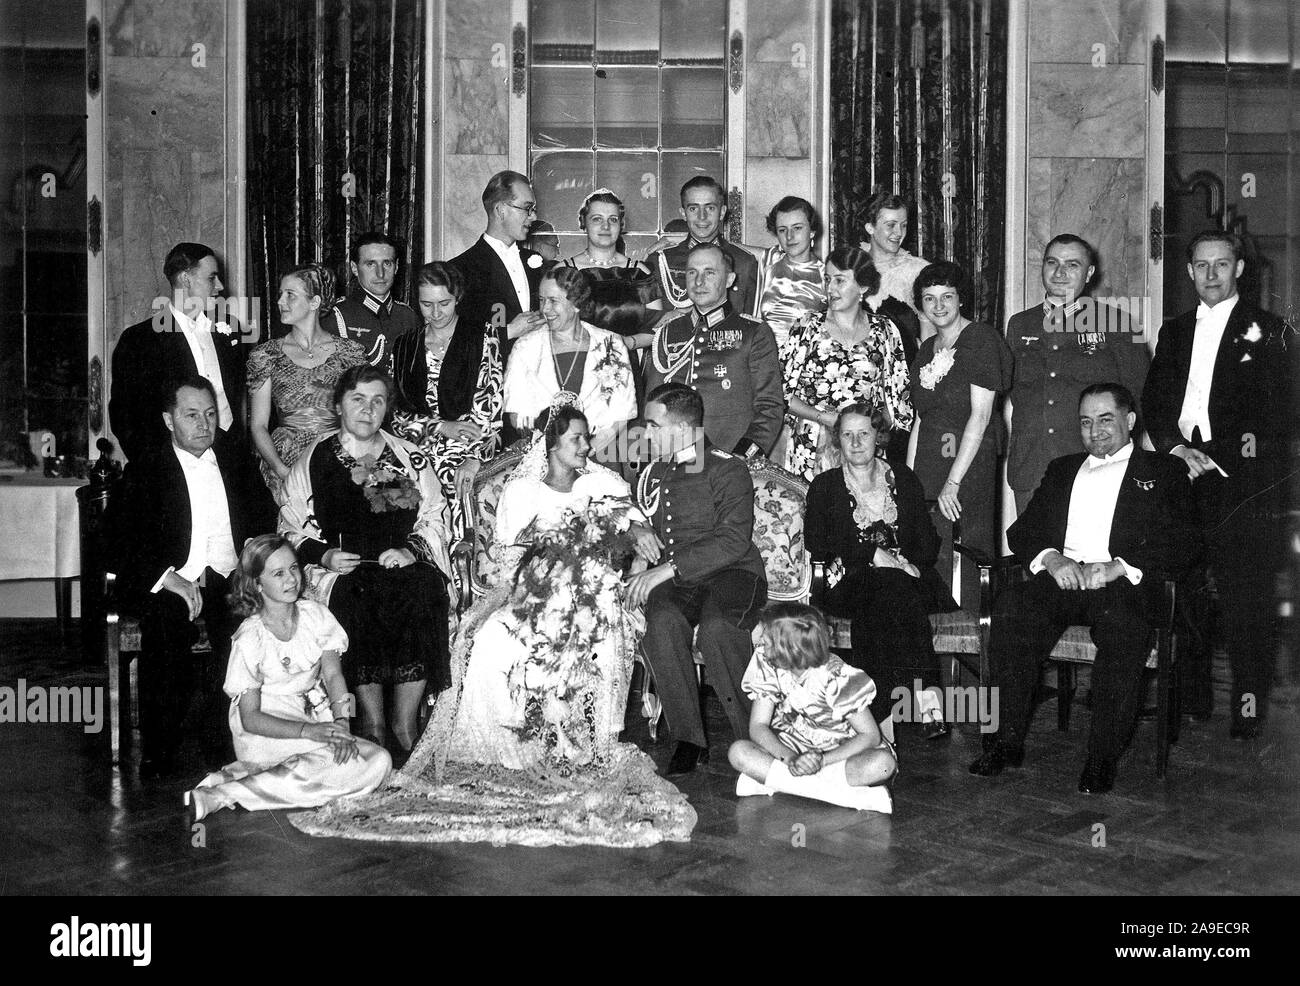 Eva Braun Collection (Album 2) - German wedding of a military man ca. 1930s  Germany Stock Photo - Alamy